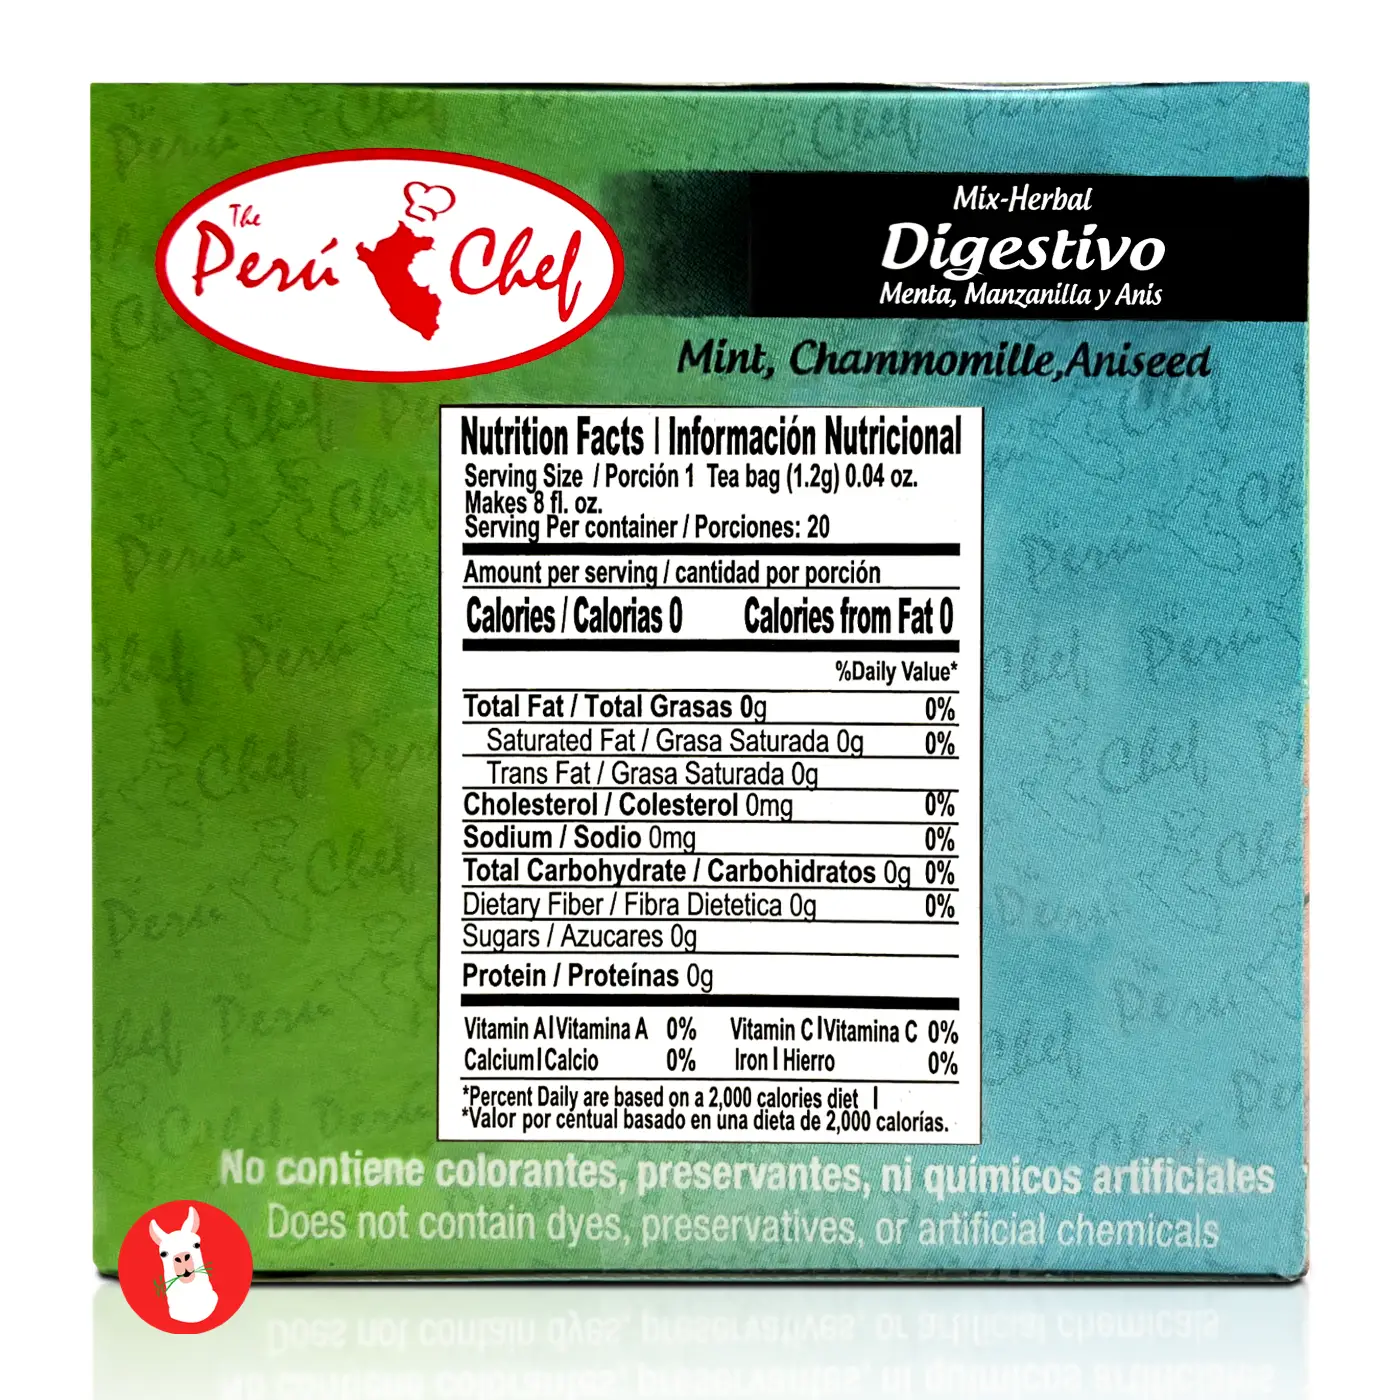 Peruchef Te Digestive Mix Herbal facts